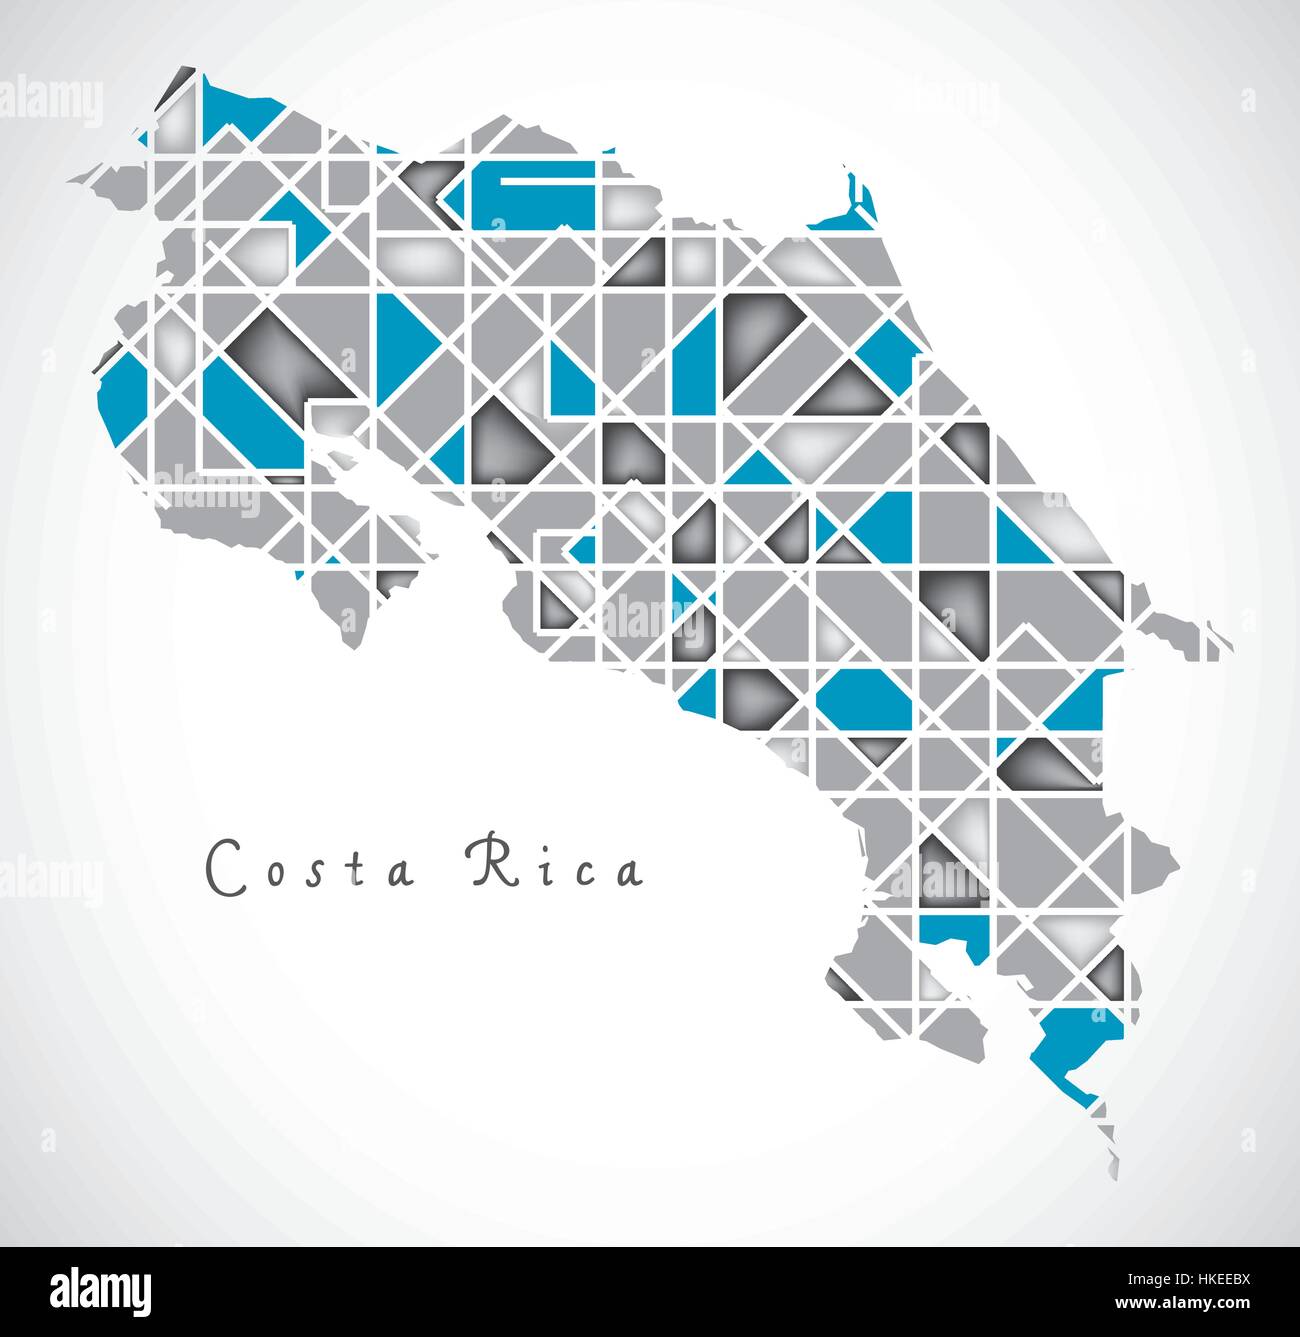 Costa Rica Map crystal diamond style artwork illustration Stock Vector